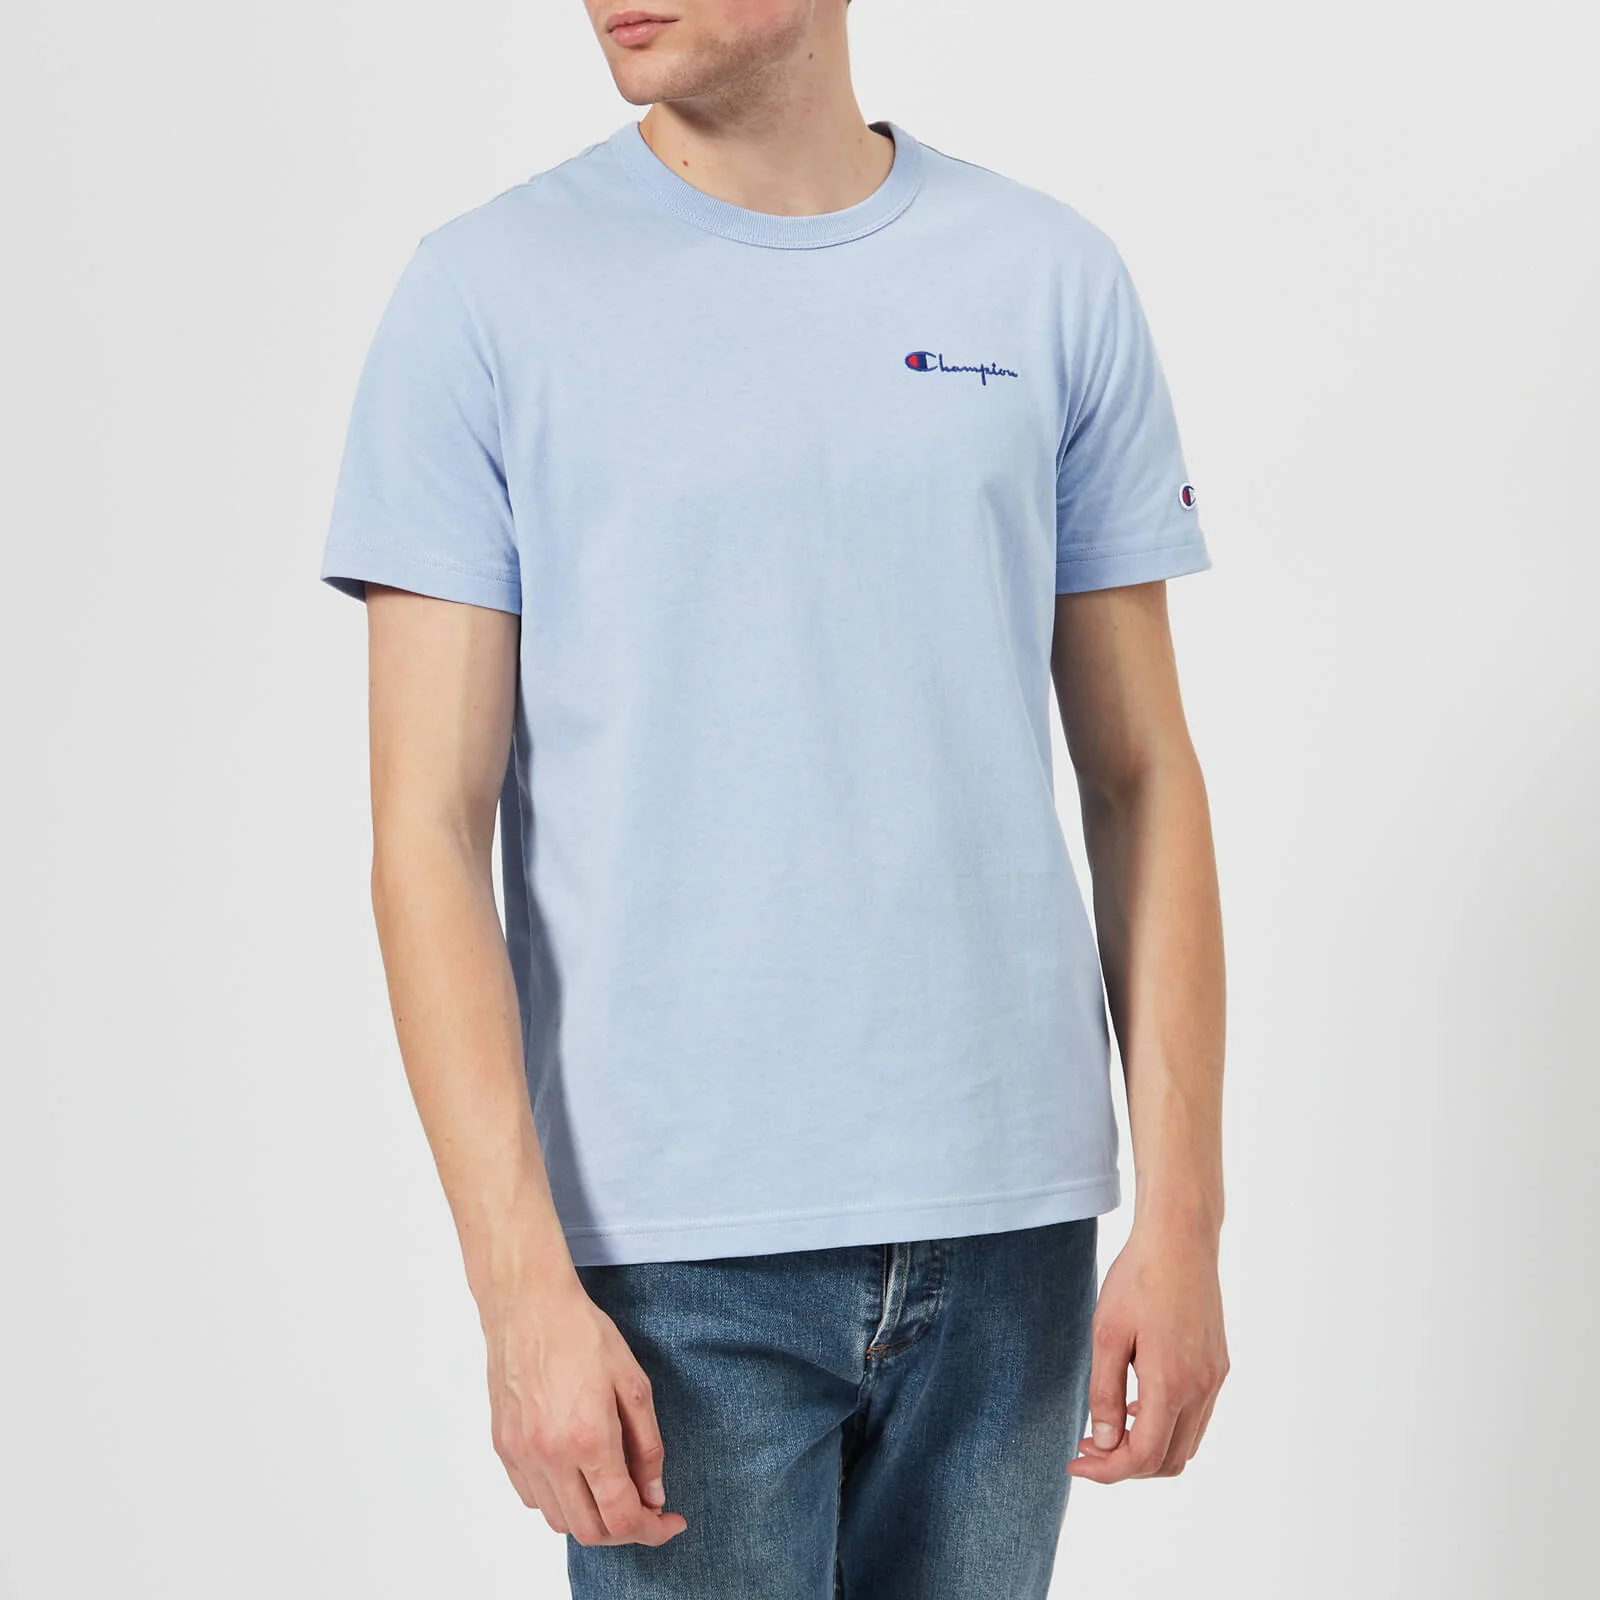 Champion Men's Short Sleeve T-Shirt - Light Blue Image 1